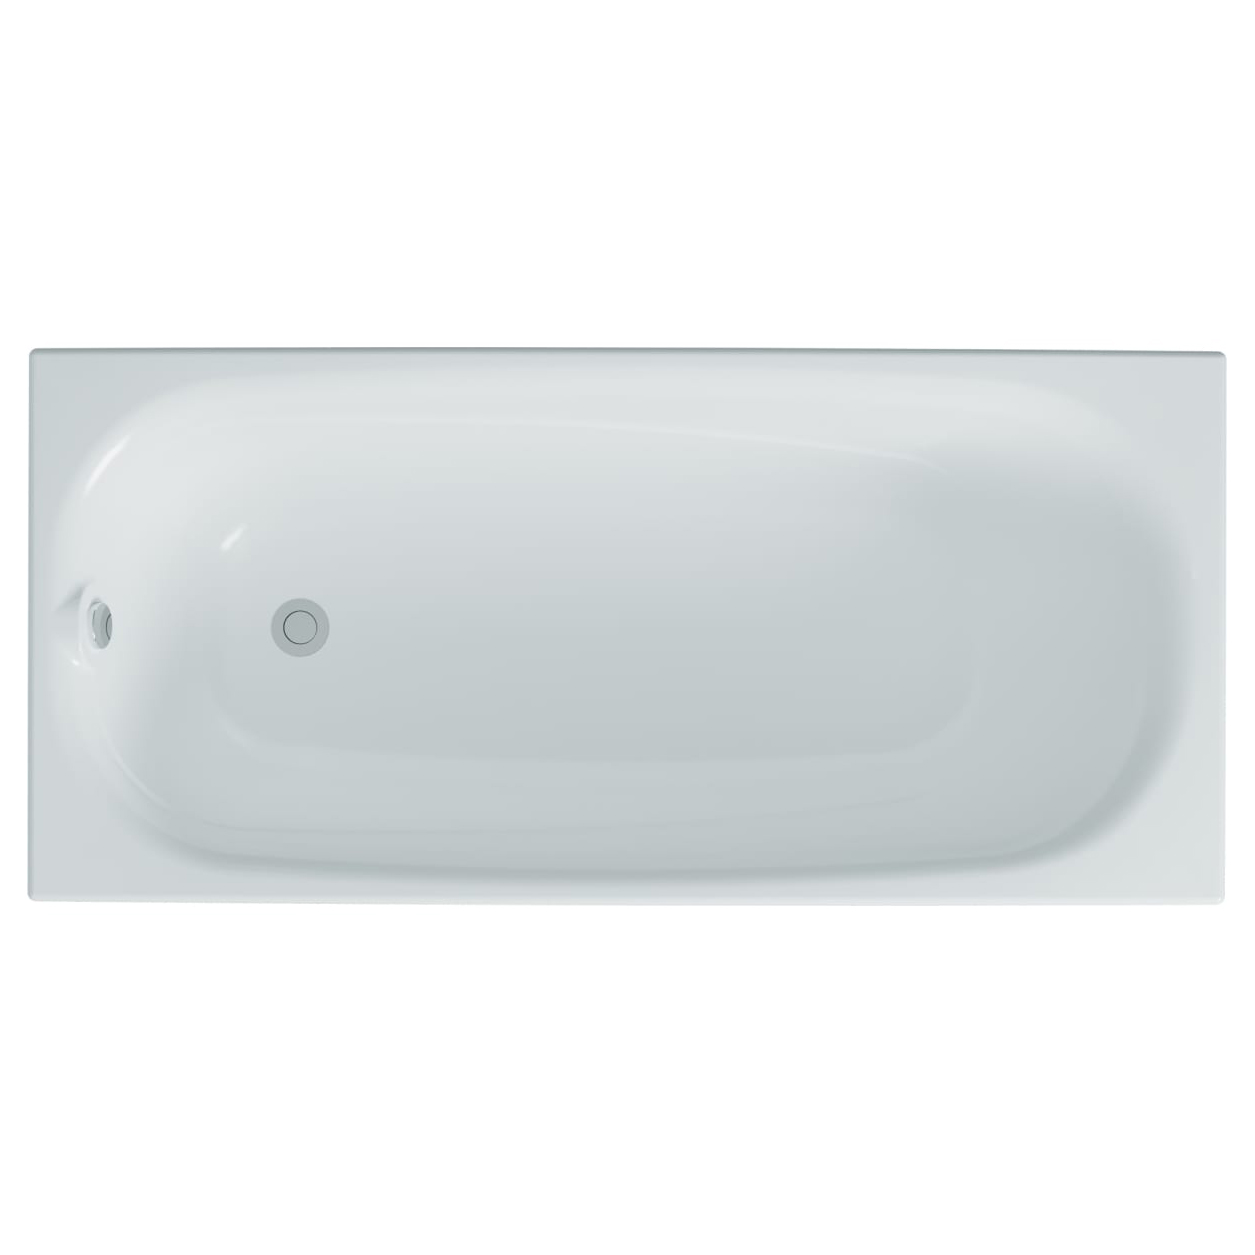 Акриловая ванна Тритон Европа 170х69.5 экран к ванне тритон gamma стандарт нерея ультра рига европа 150 щ0000050168